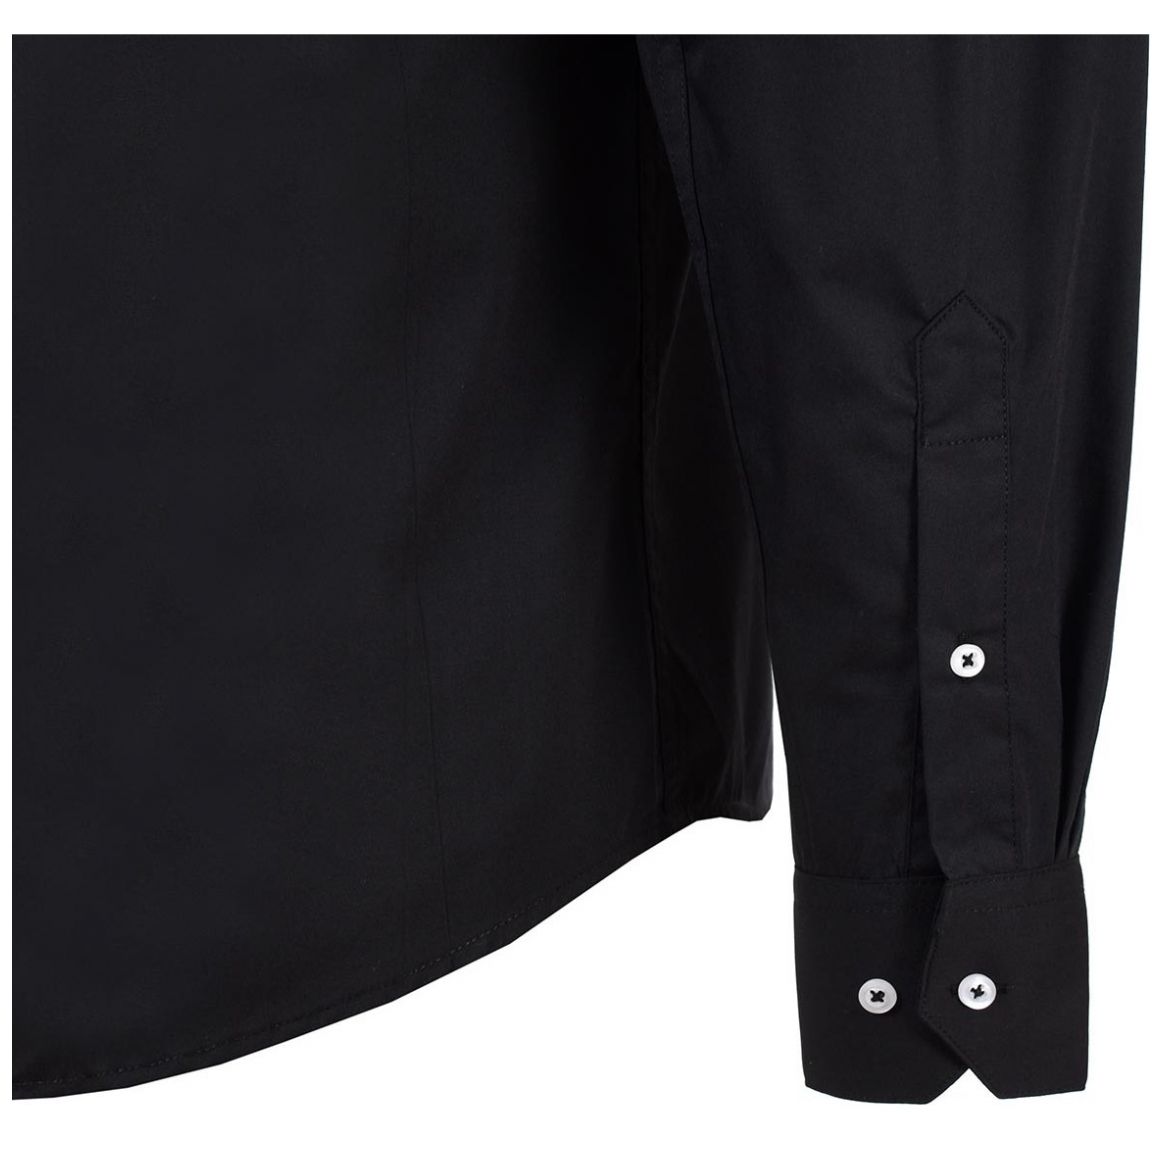 Camisa de Vestir Regular Bruno Magnani Color Negro para Hombre Modelo Elo Bm85001Ng